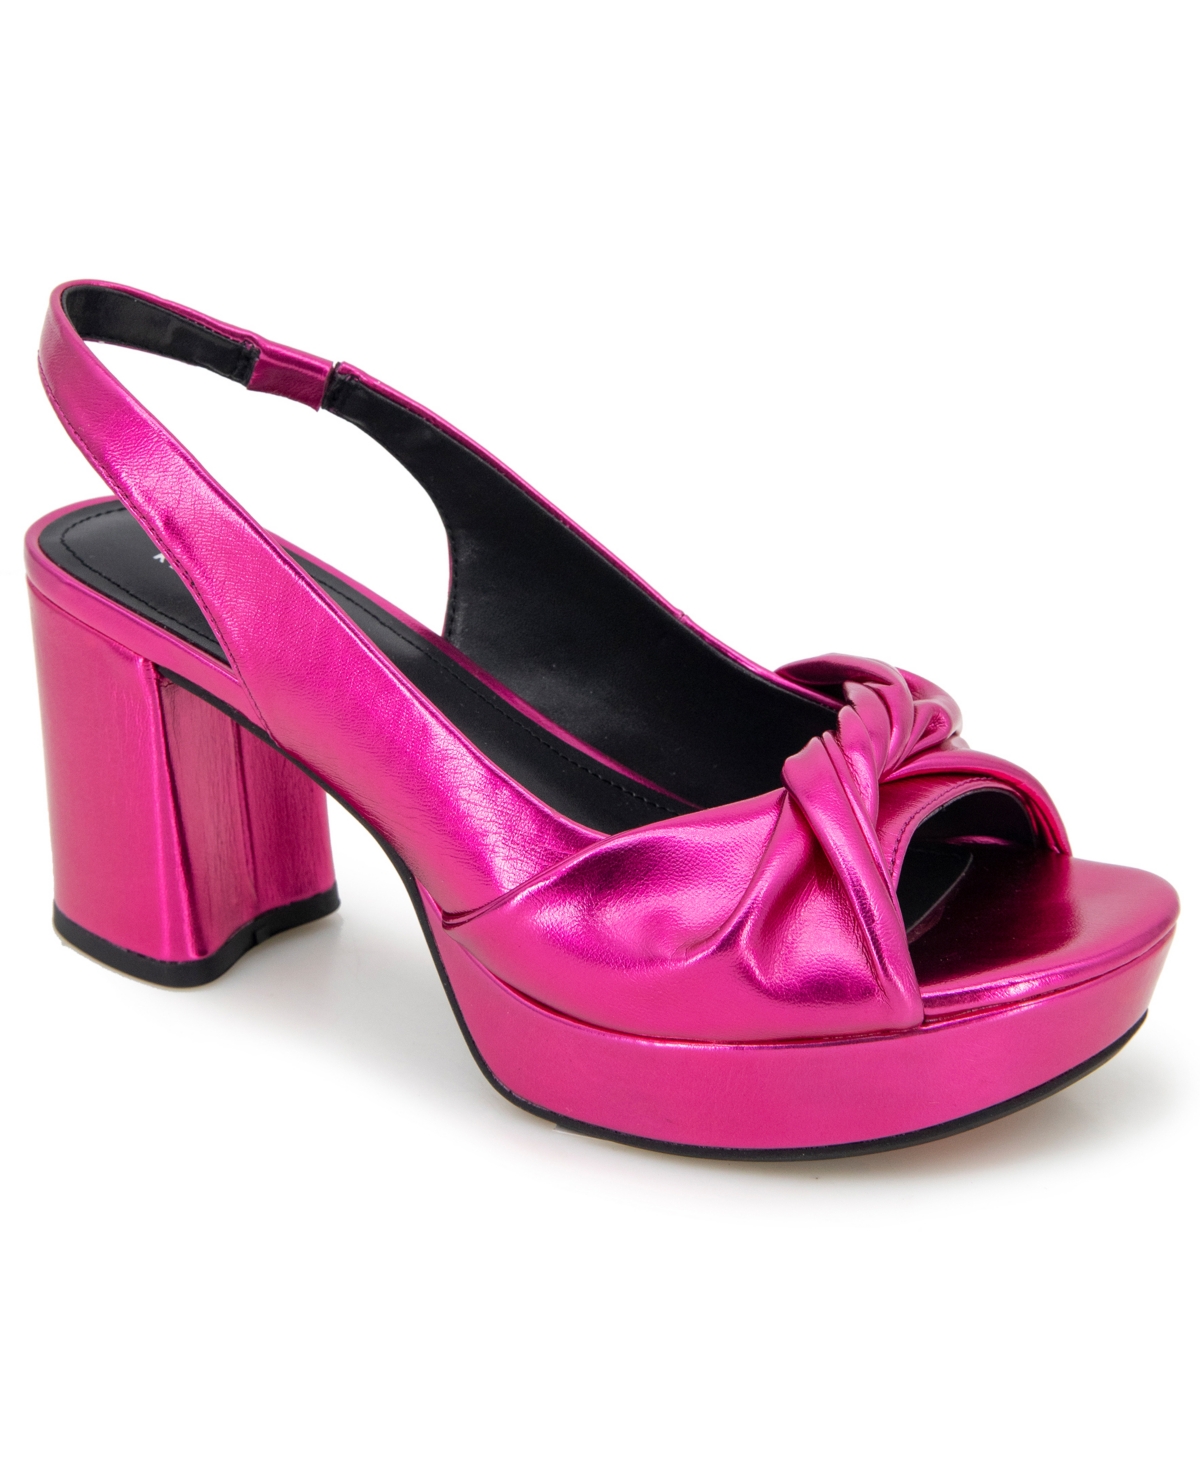 Women's Rylee Platform Sandals - Hot Pink